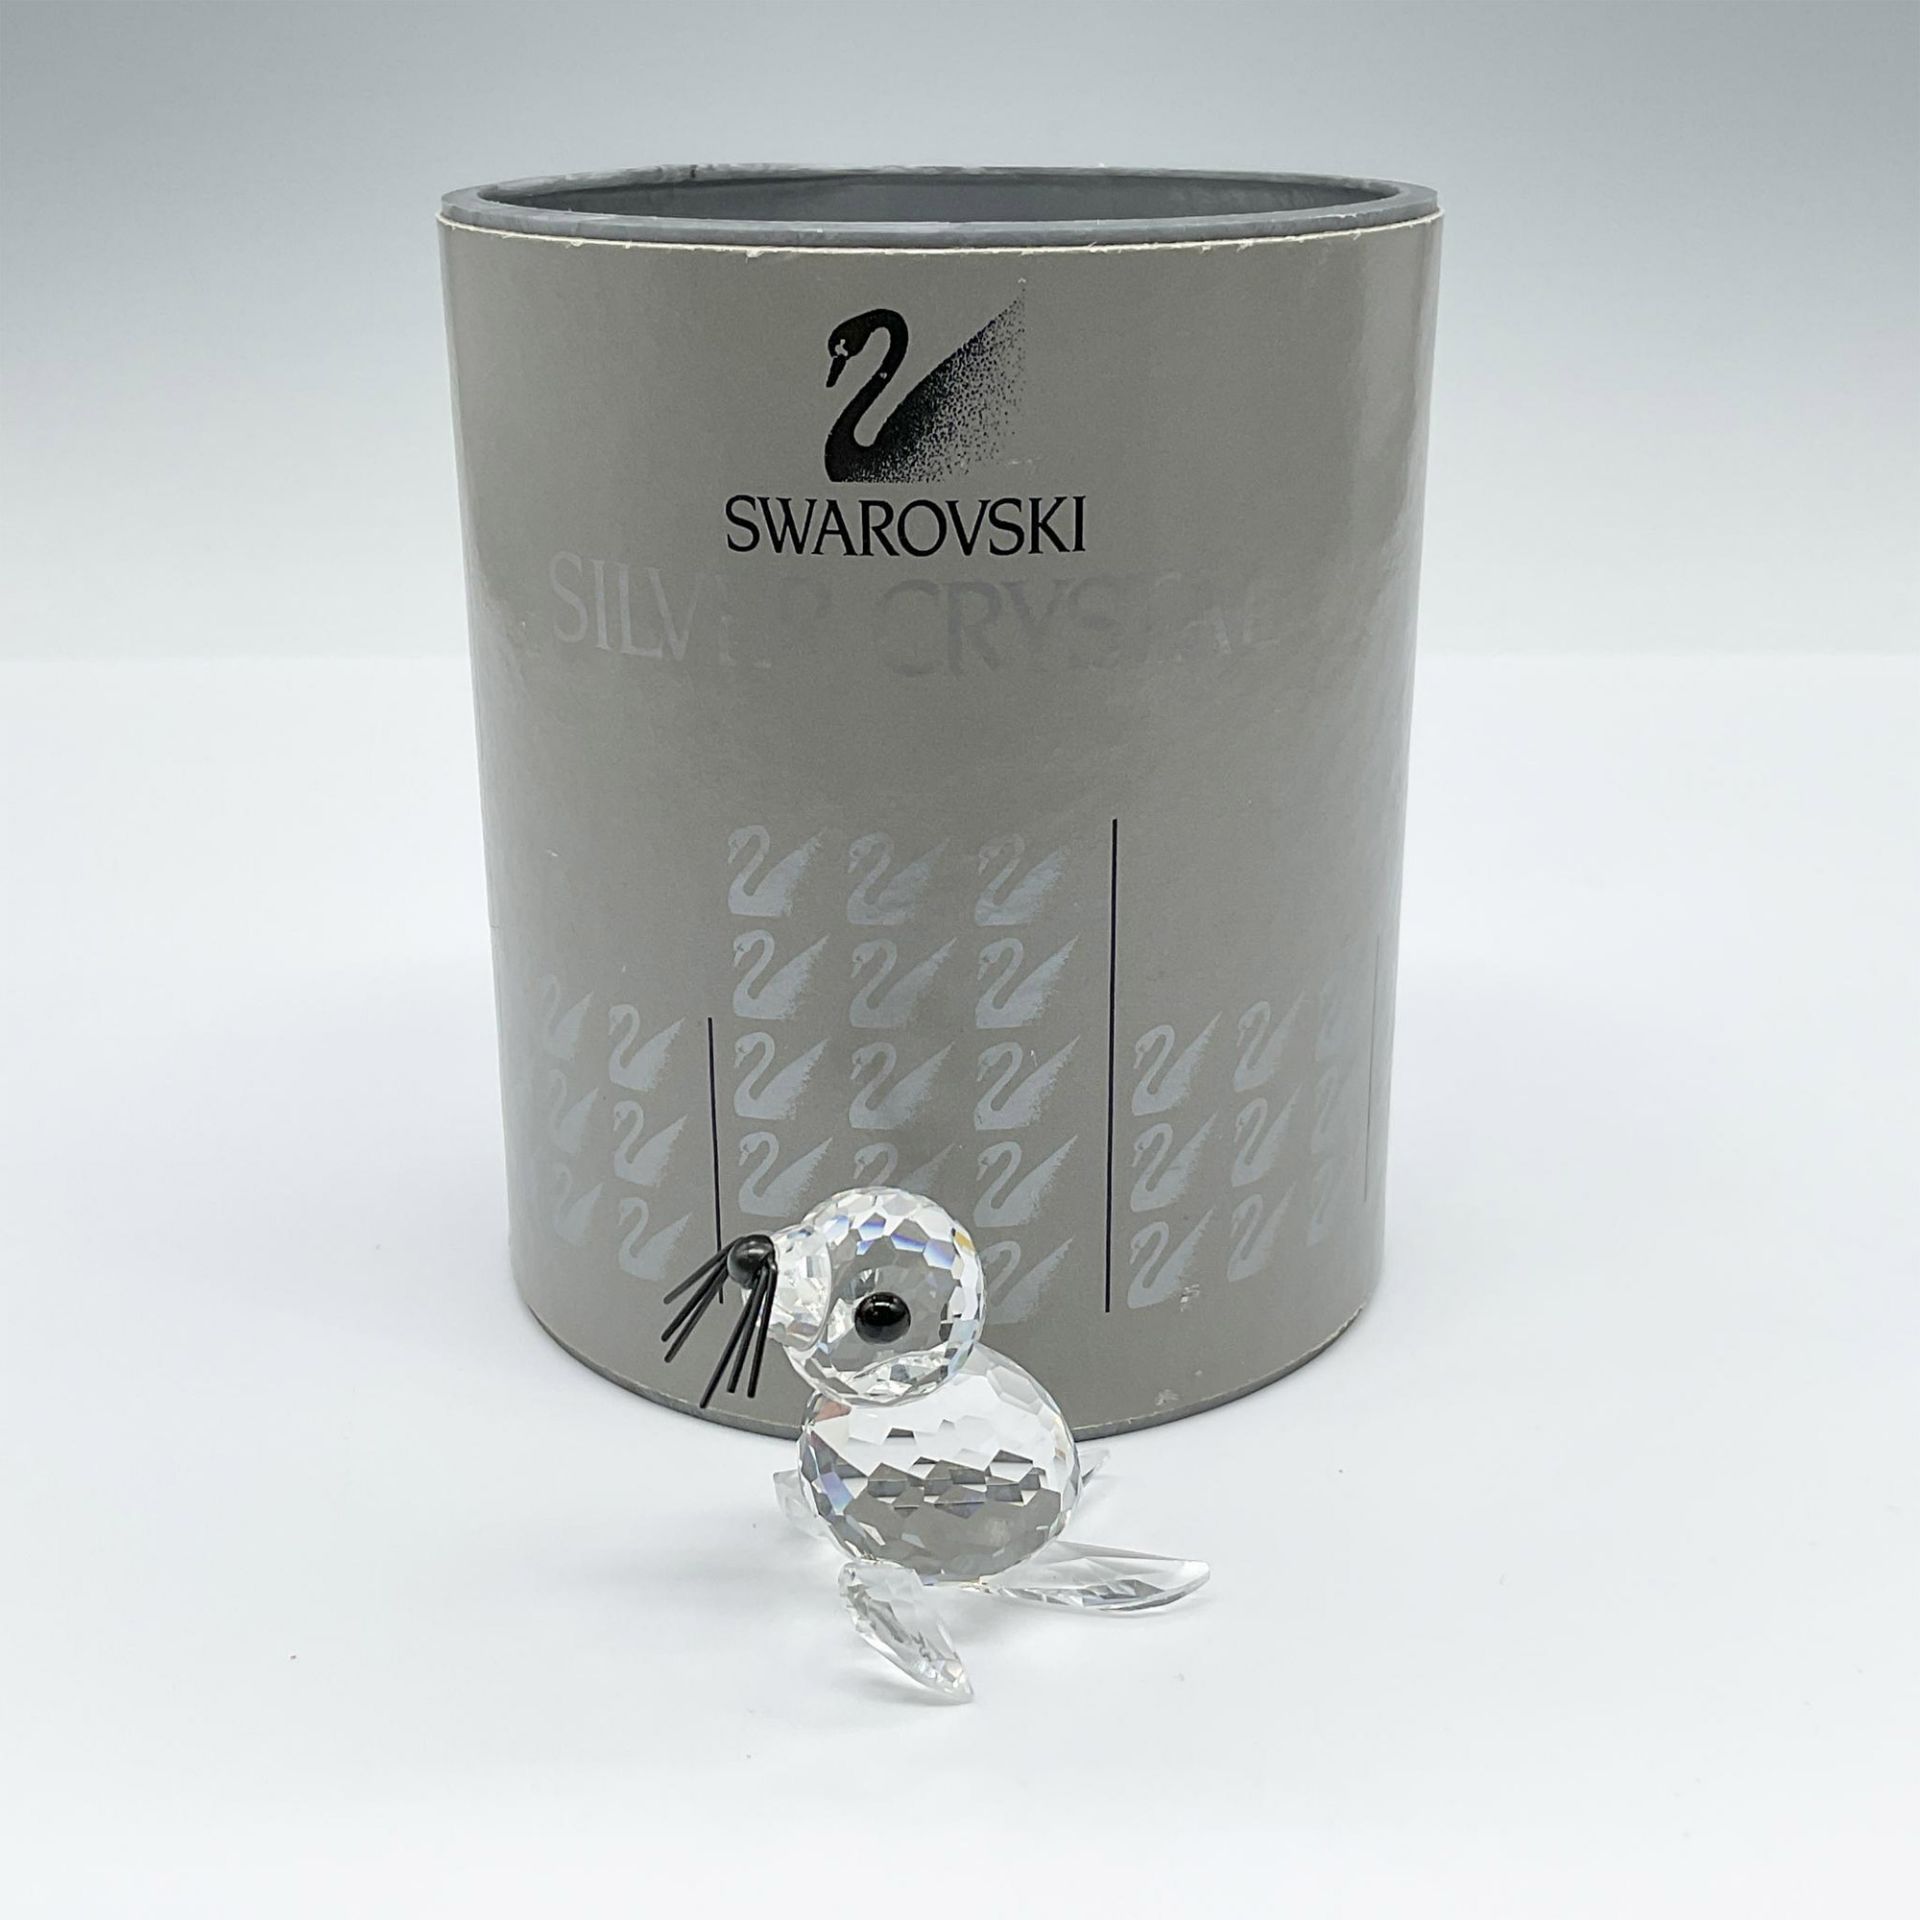 Swarovski Silver Crystal Figurine Baby Seal w/Black Whiskers - Image 4 of 4